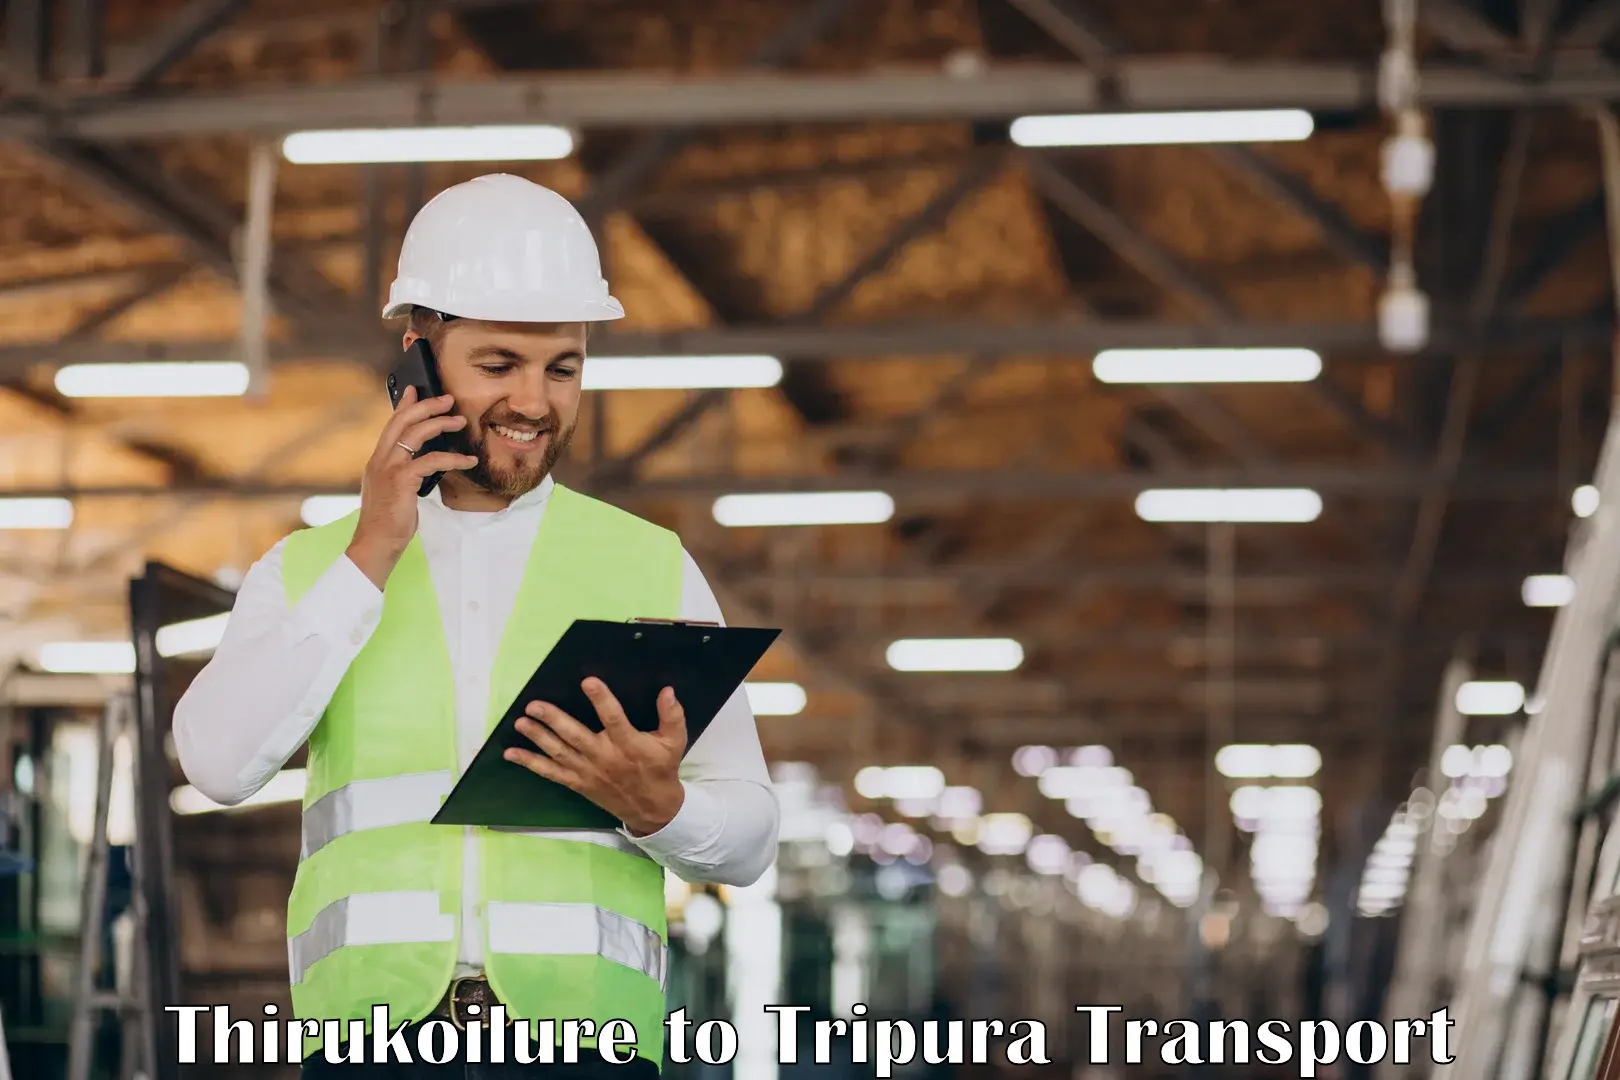 Transportation services Thirukoilure to Udaipur Tripura